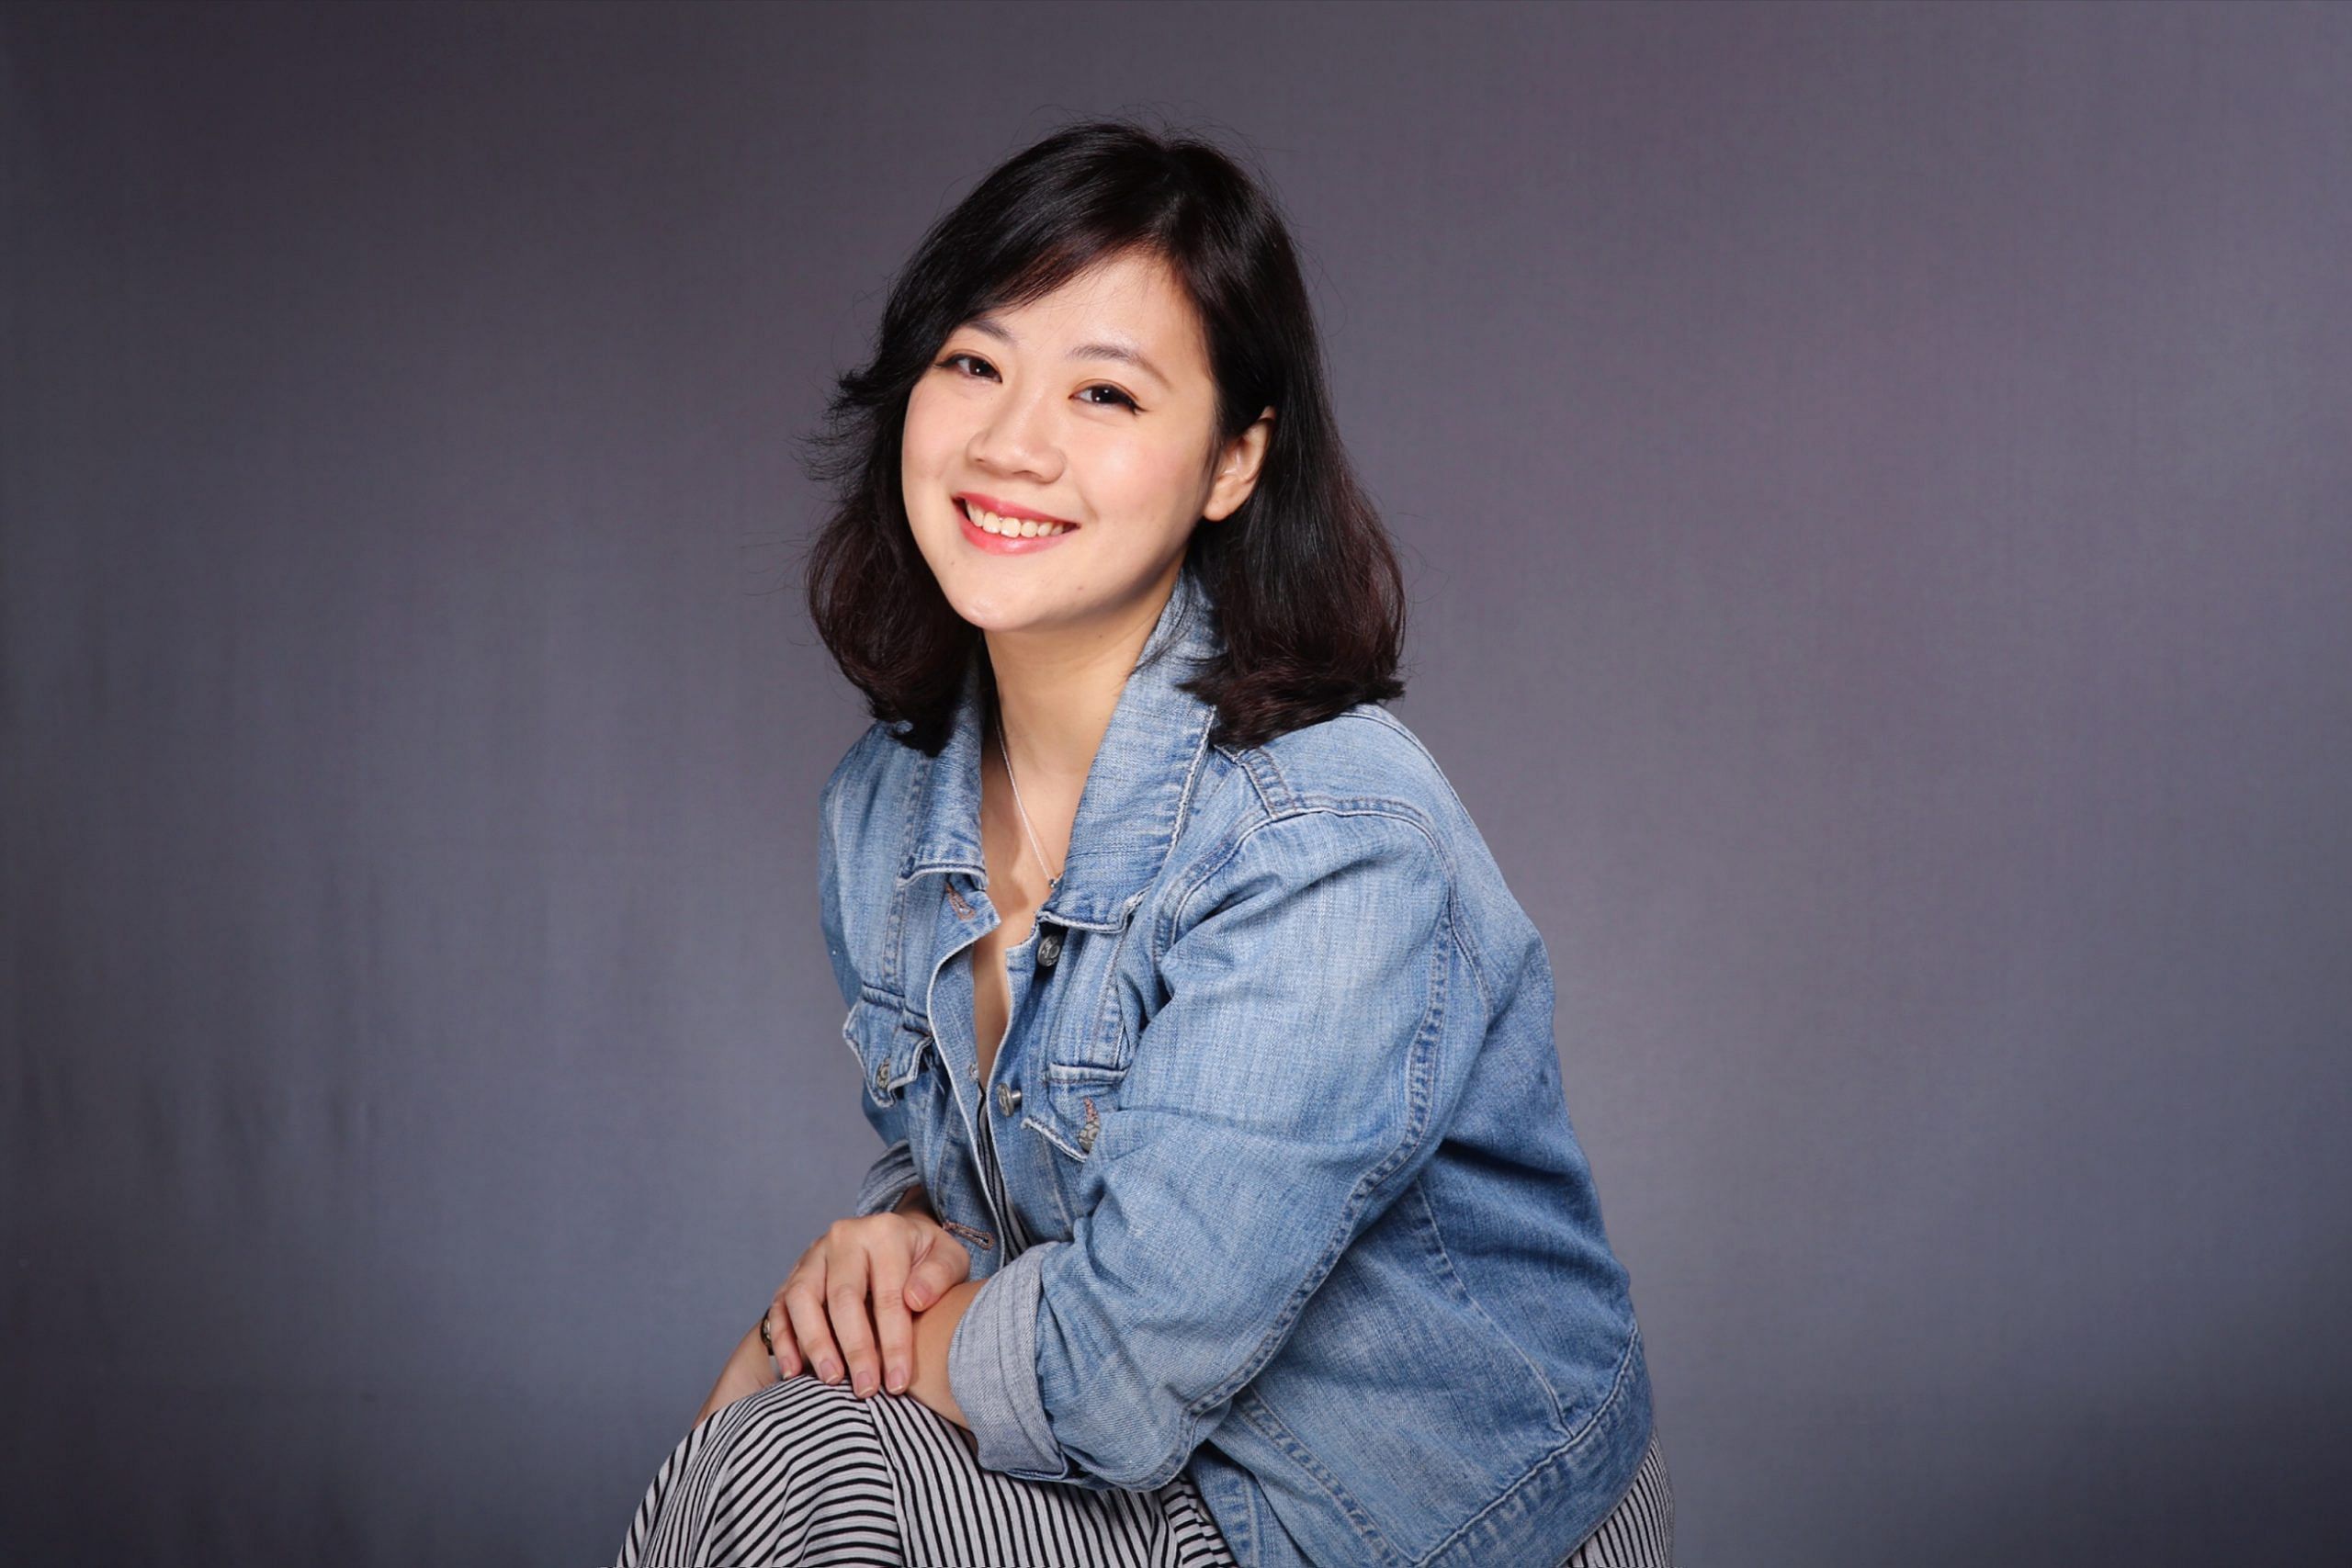 Vivian Lim Provokes Conversations To Bridge Differences The Peak Magazine